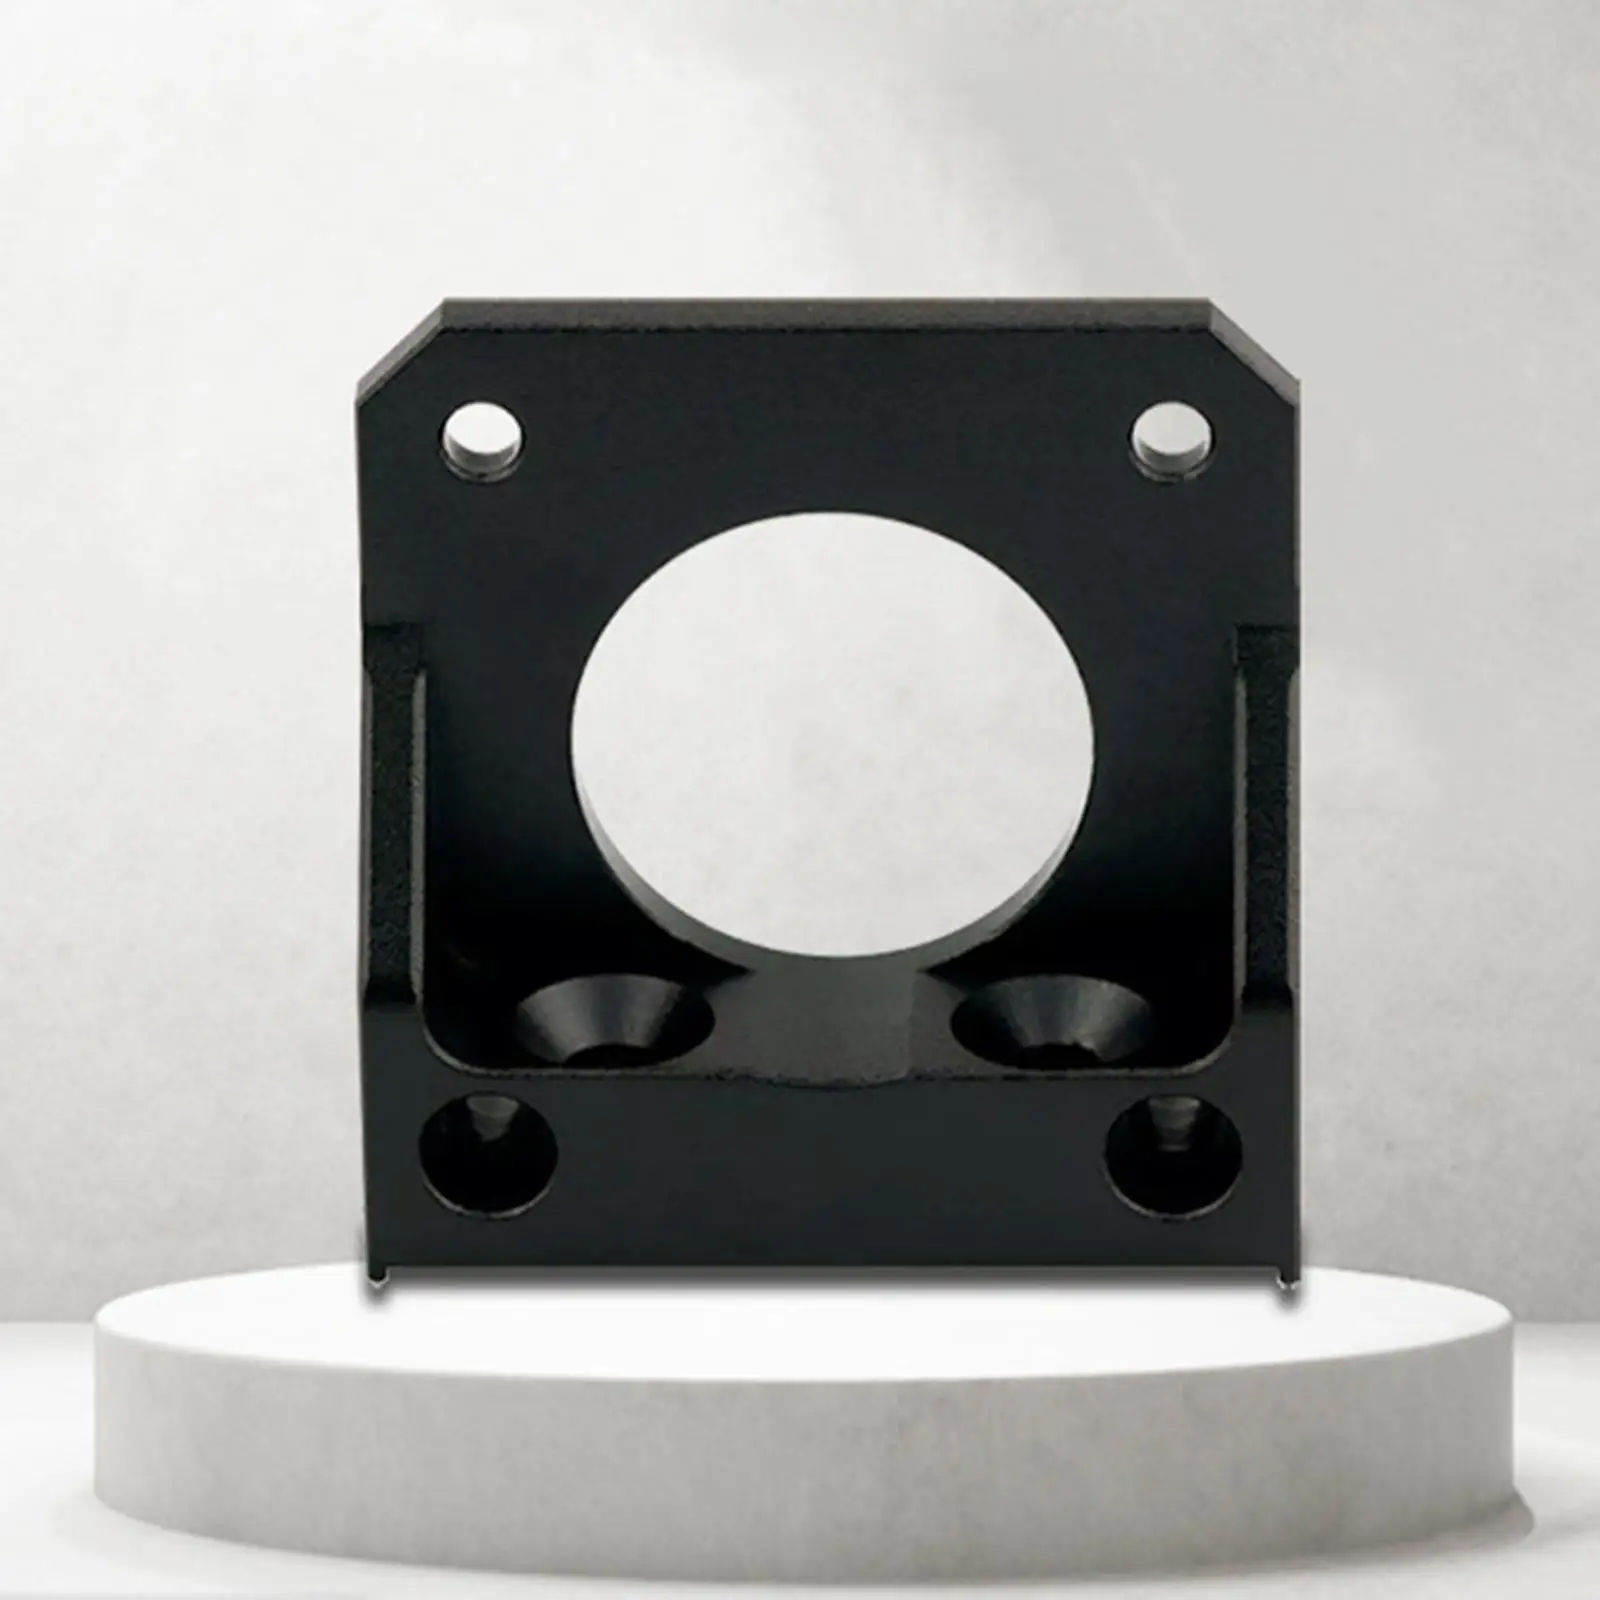 Stepper Motor Mount Plate Bracket Aluminum Plate Support Shelf Repairing Fixed Plate Replacement for 3D Printer for Ender 3 Pro